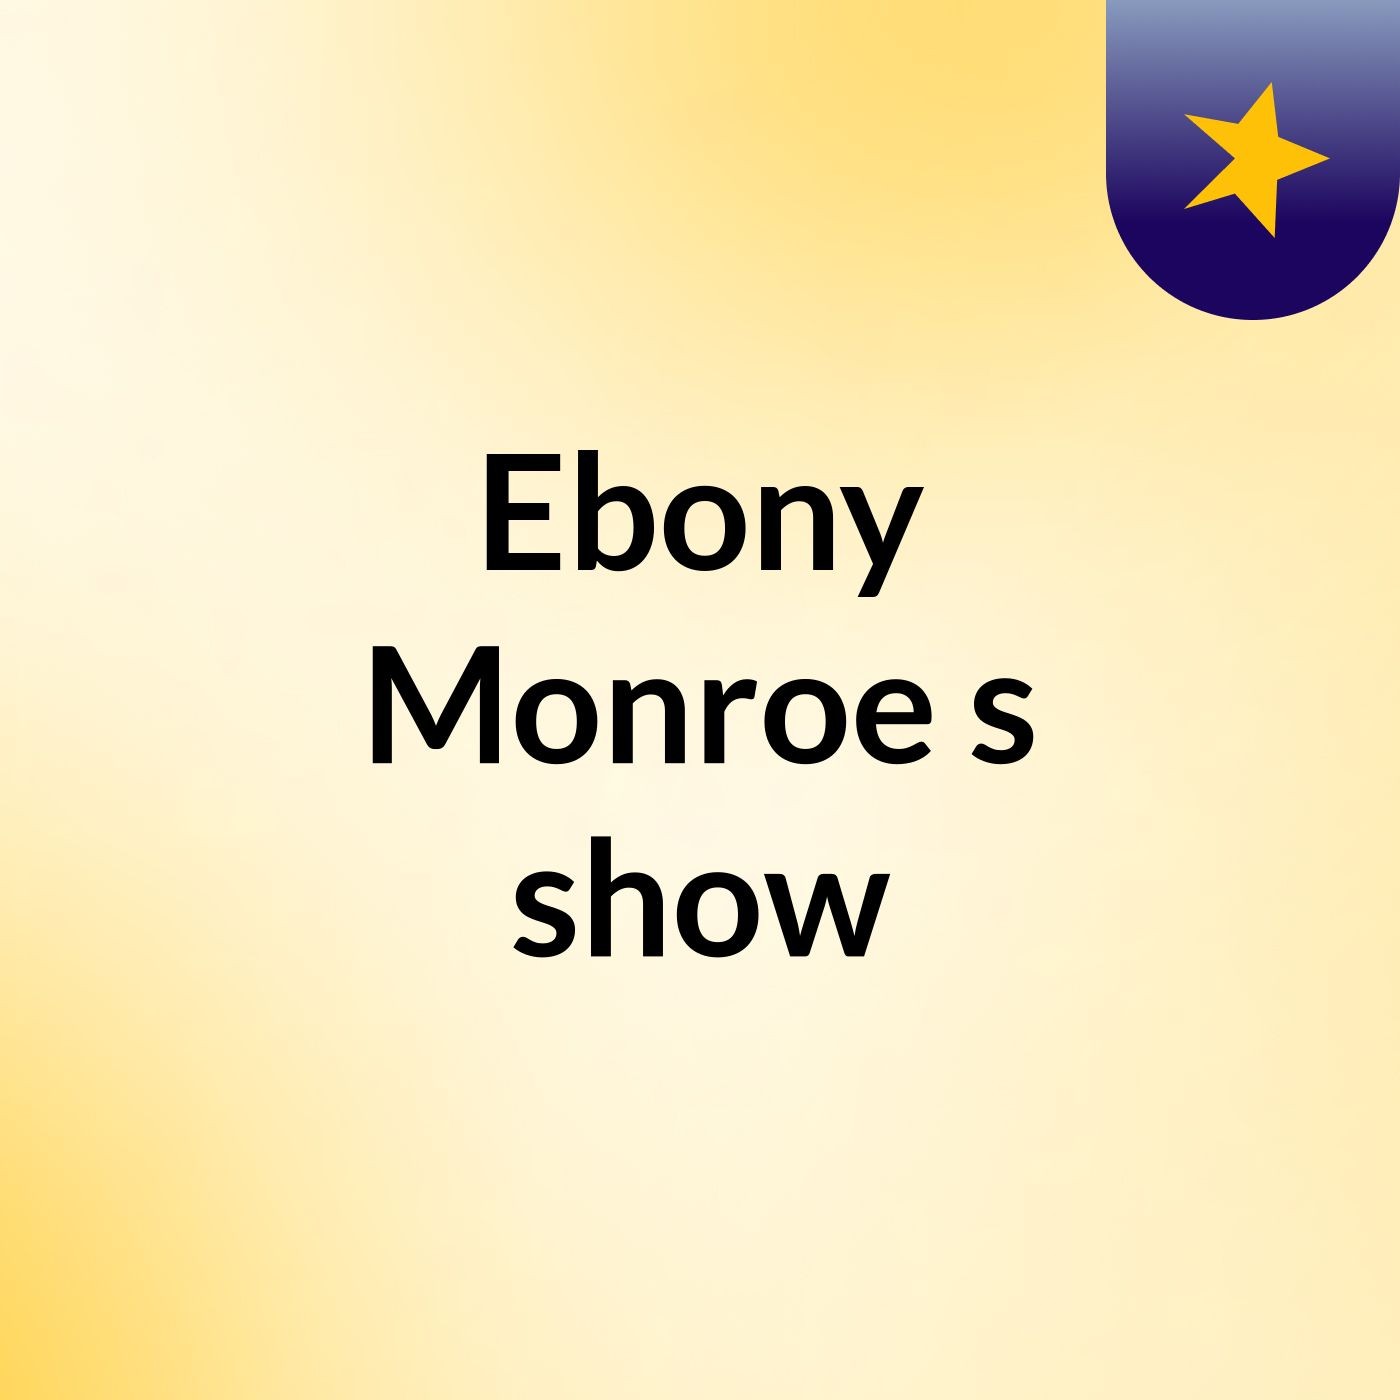 Ebony Monroe's show